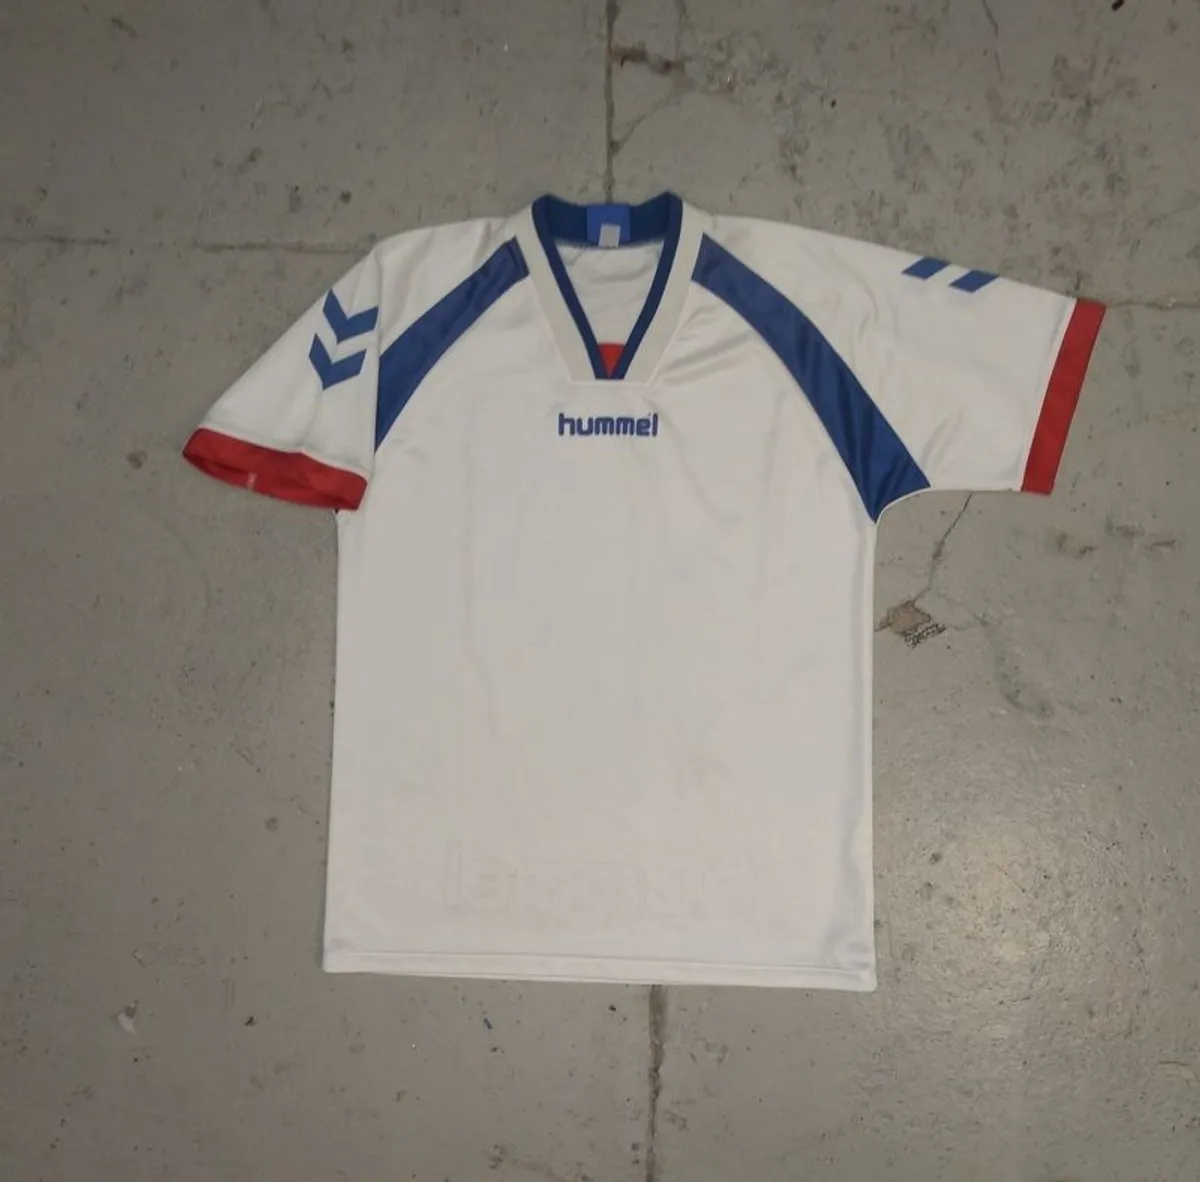 FREE POST Vintage Hummel Football Shirt 1990s Retro Jersey Shirt Soccer Football Festival Oldschool Spellout White